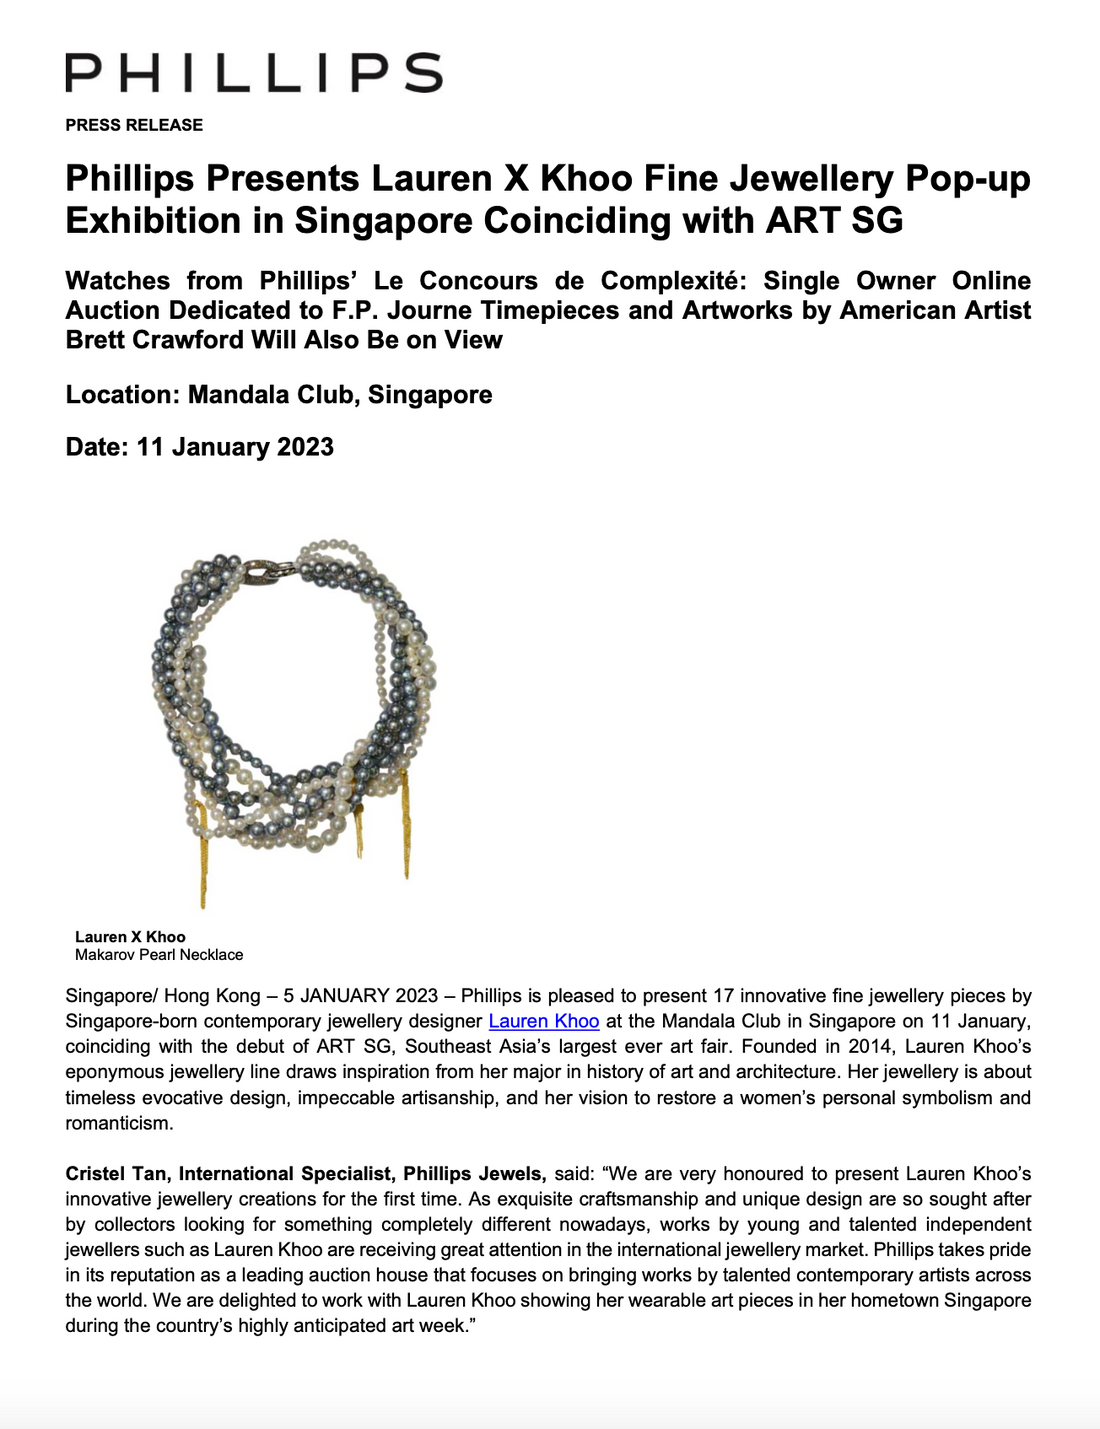 Phillips Presents Lauren X Khoo Fine Jewellery Pop-up Exhibition in Singapore Coinciding with ART SG